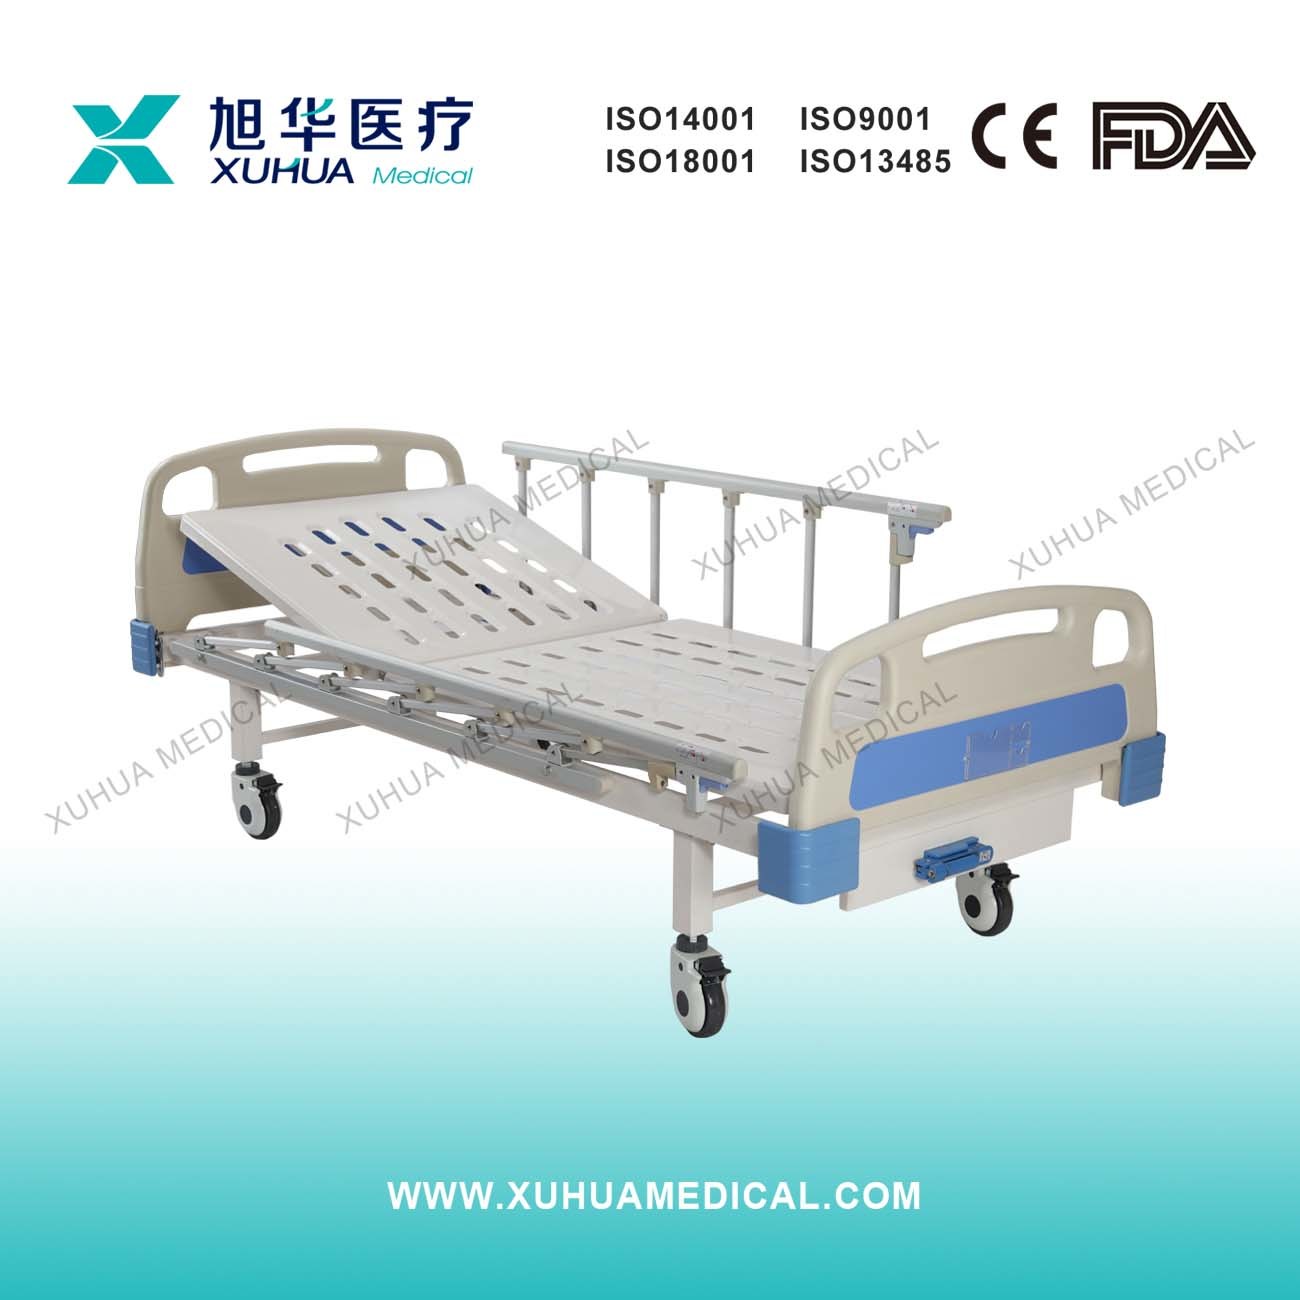 Economical Model Manual Hospital Bed (1 Crank) Ce Approved